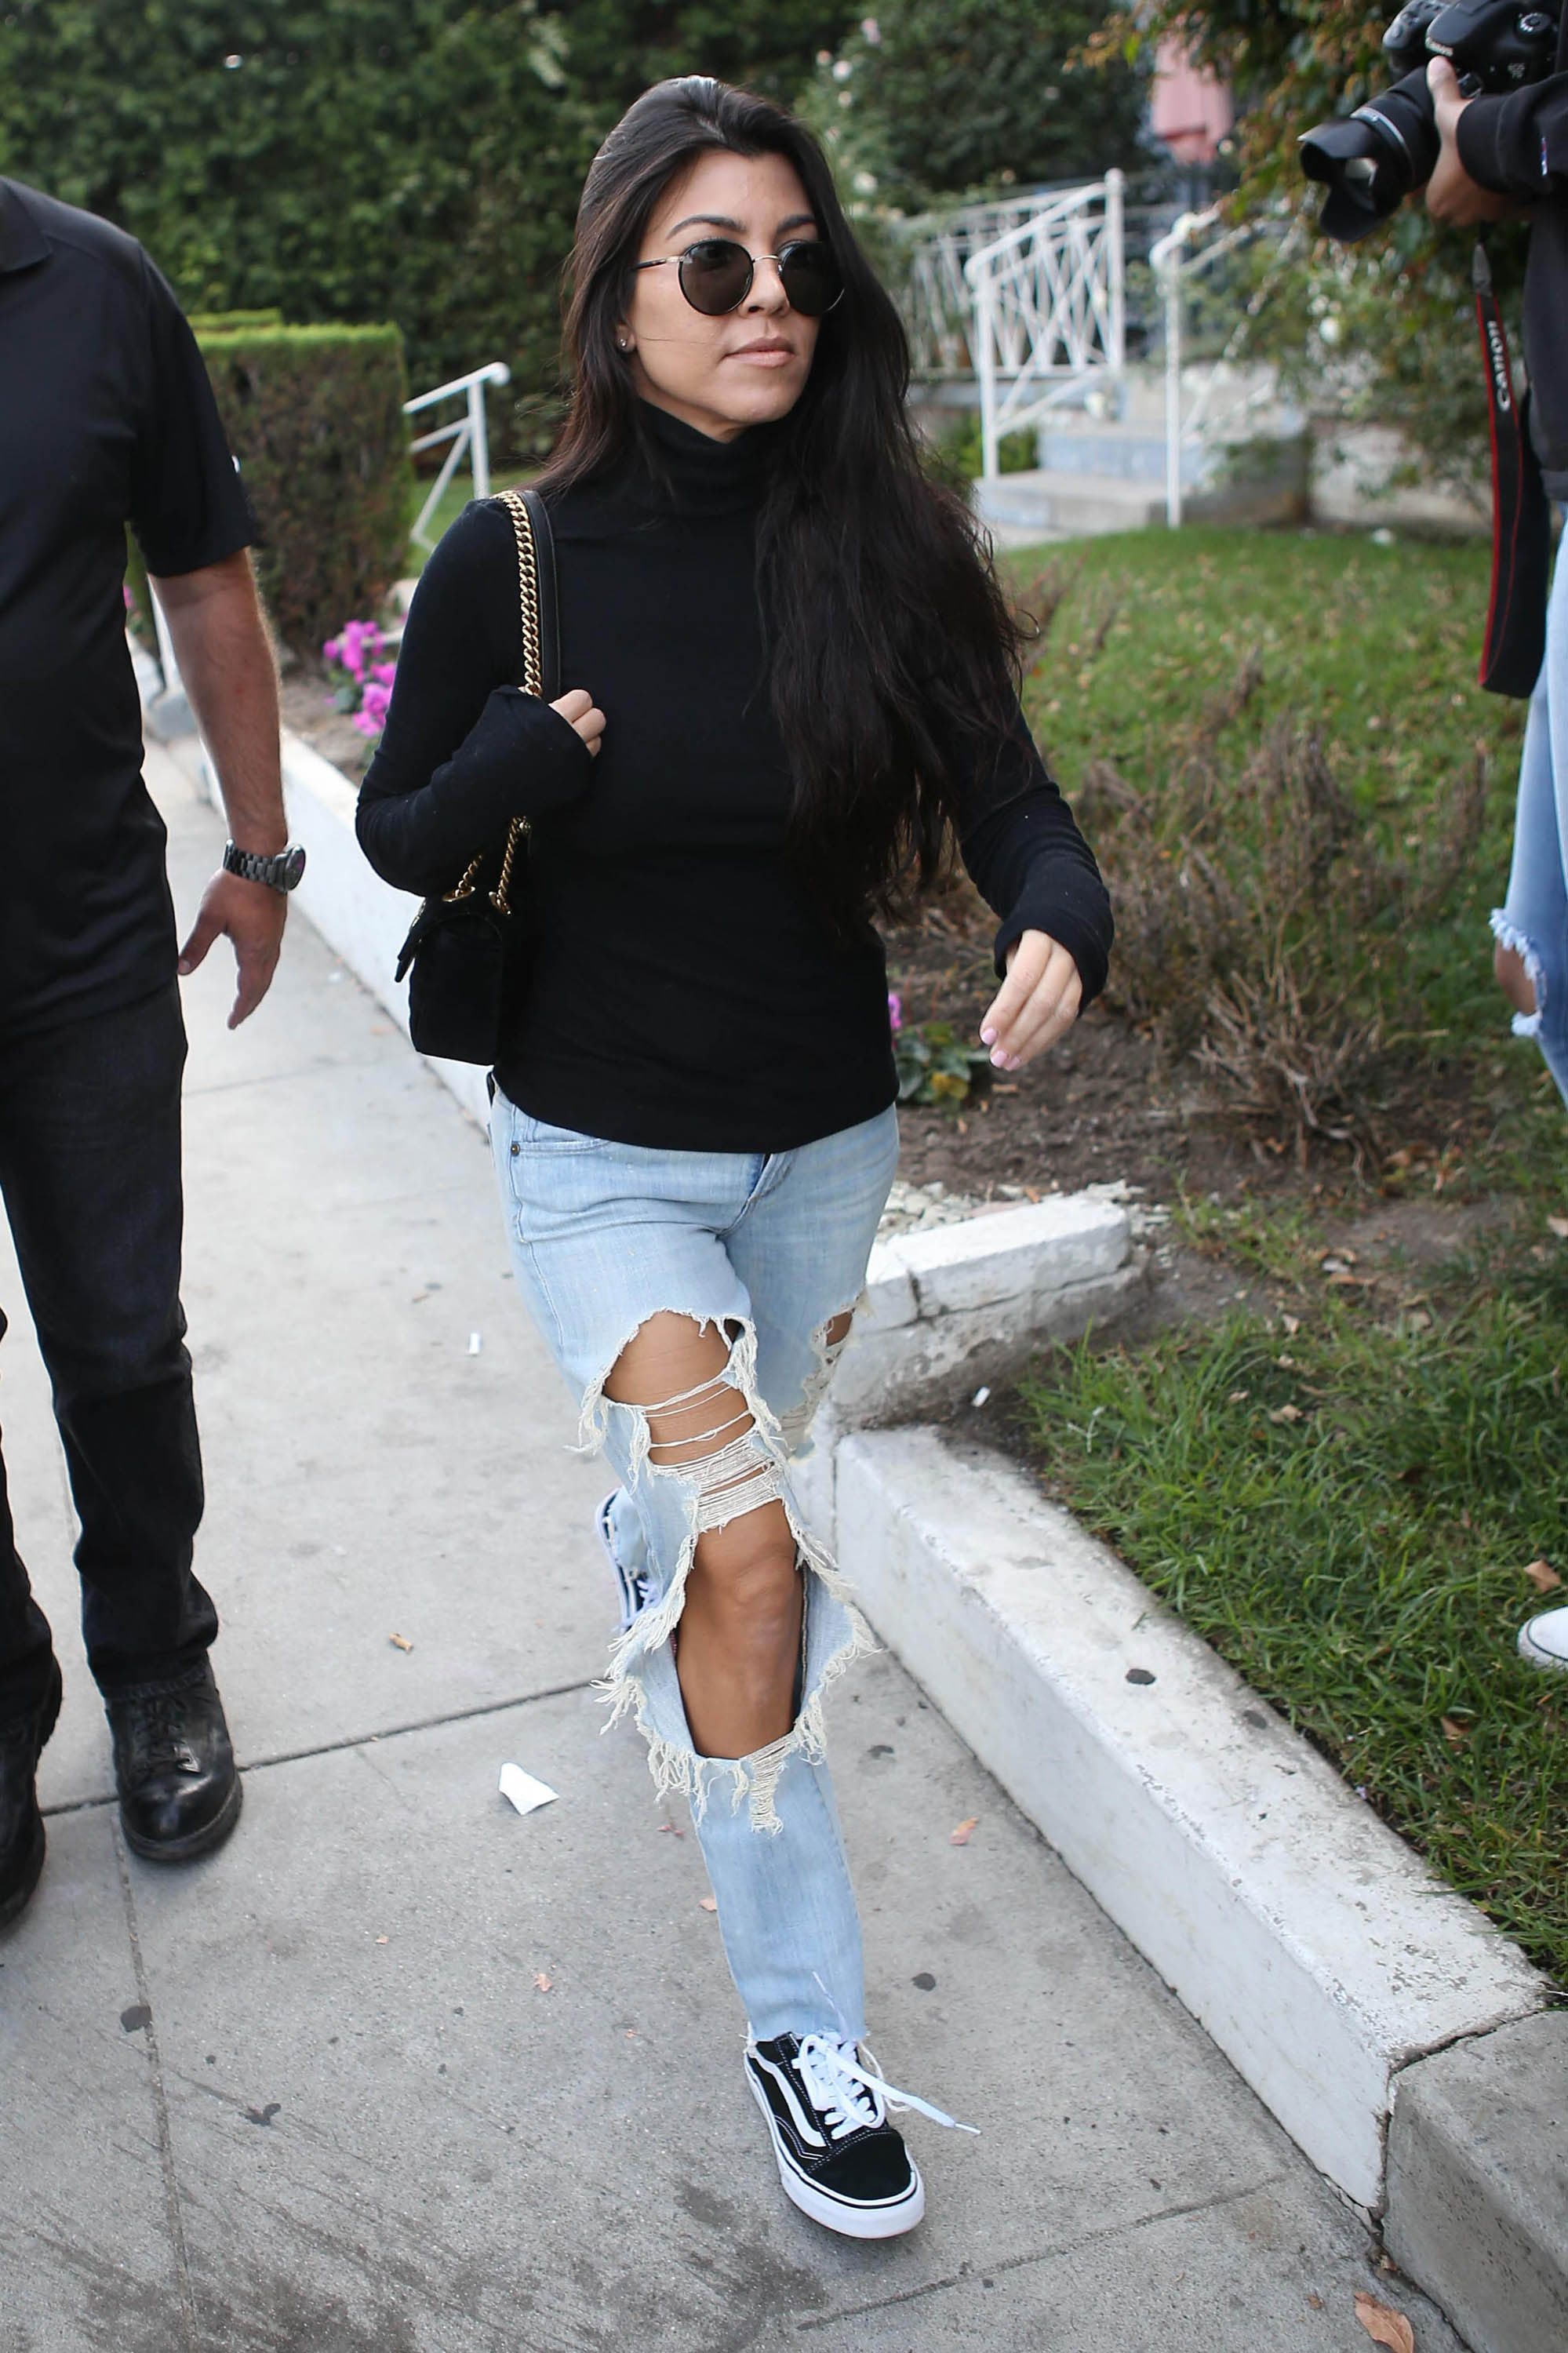 Shop Kourtney Kardashian's turtleneck top and destroyed jeans look for less.